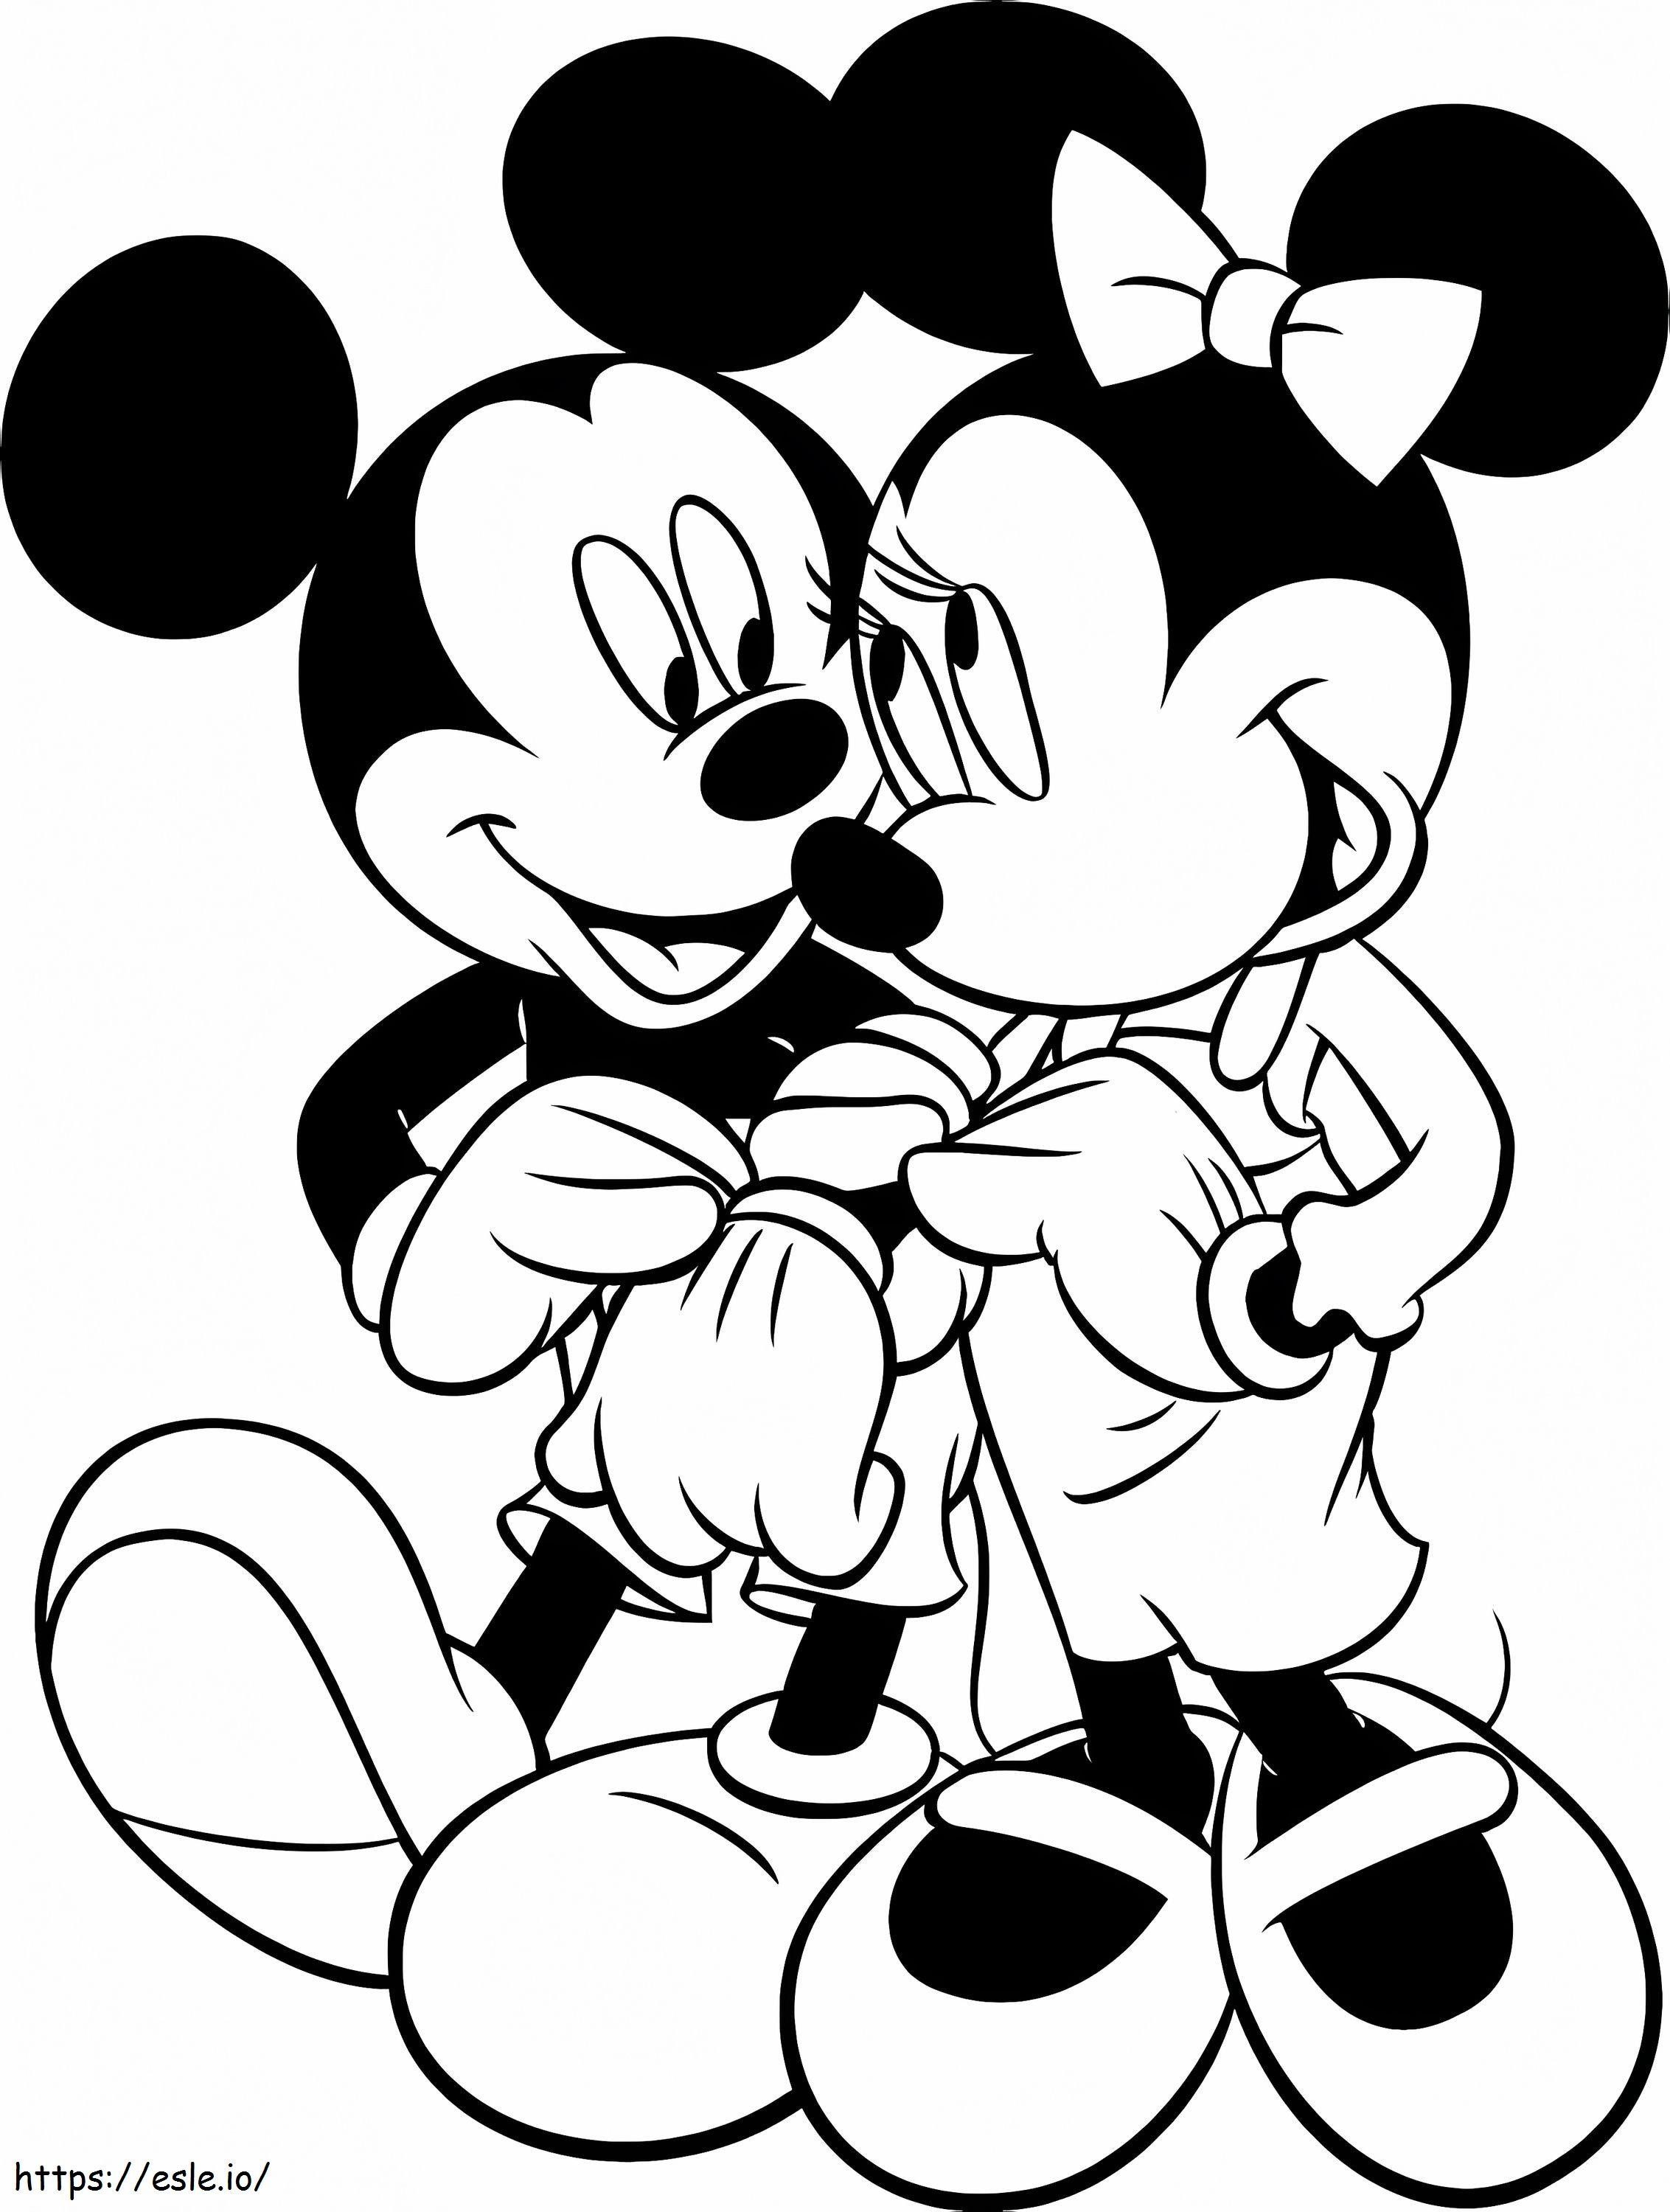 Dia dos namorados Mickey e Minnie Mouse para colorir